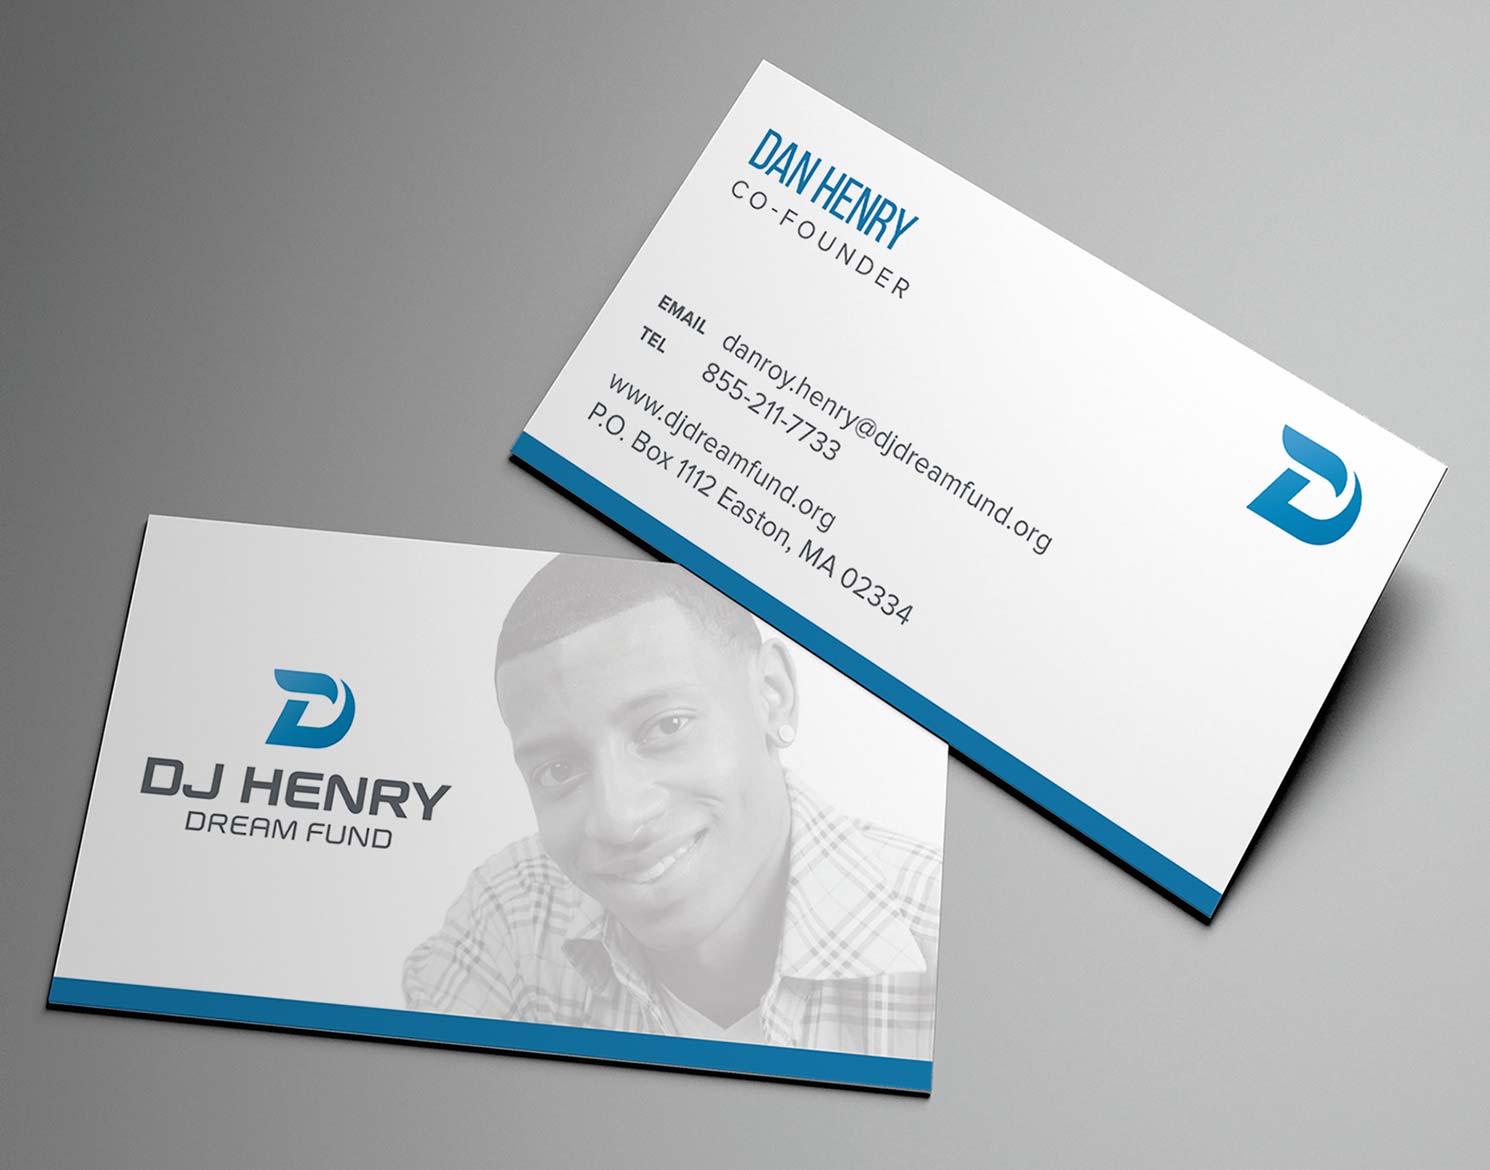 DJ Henry Dream Fund business card design